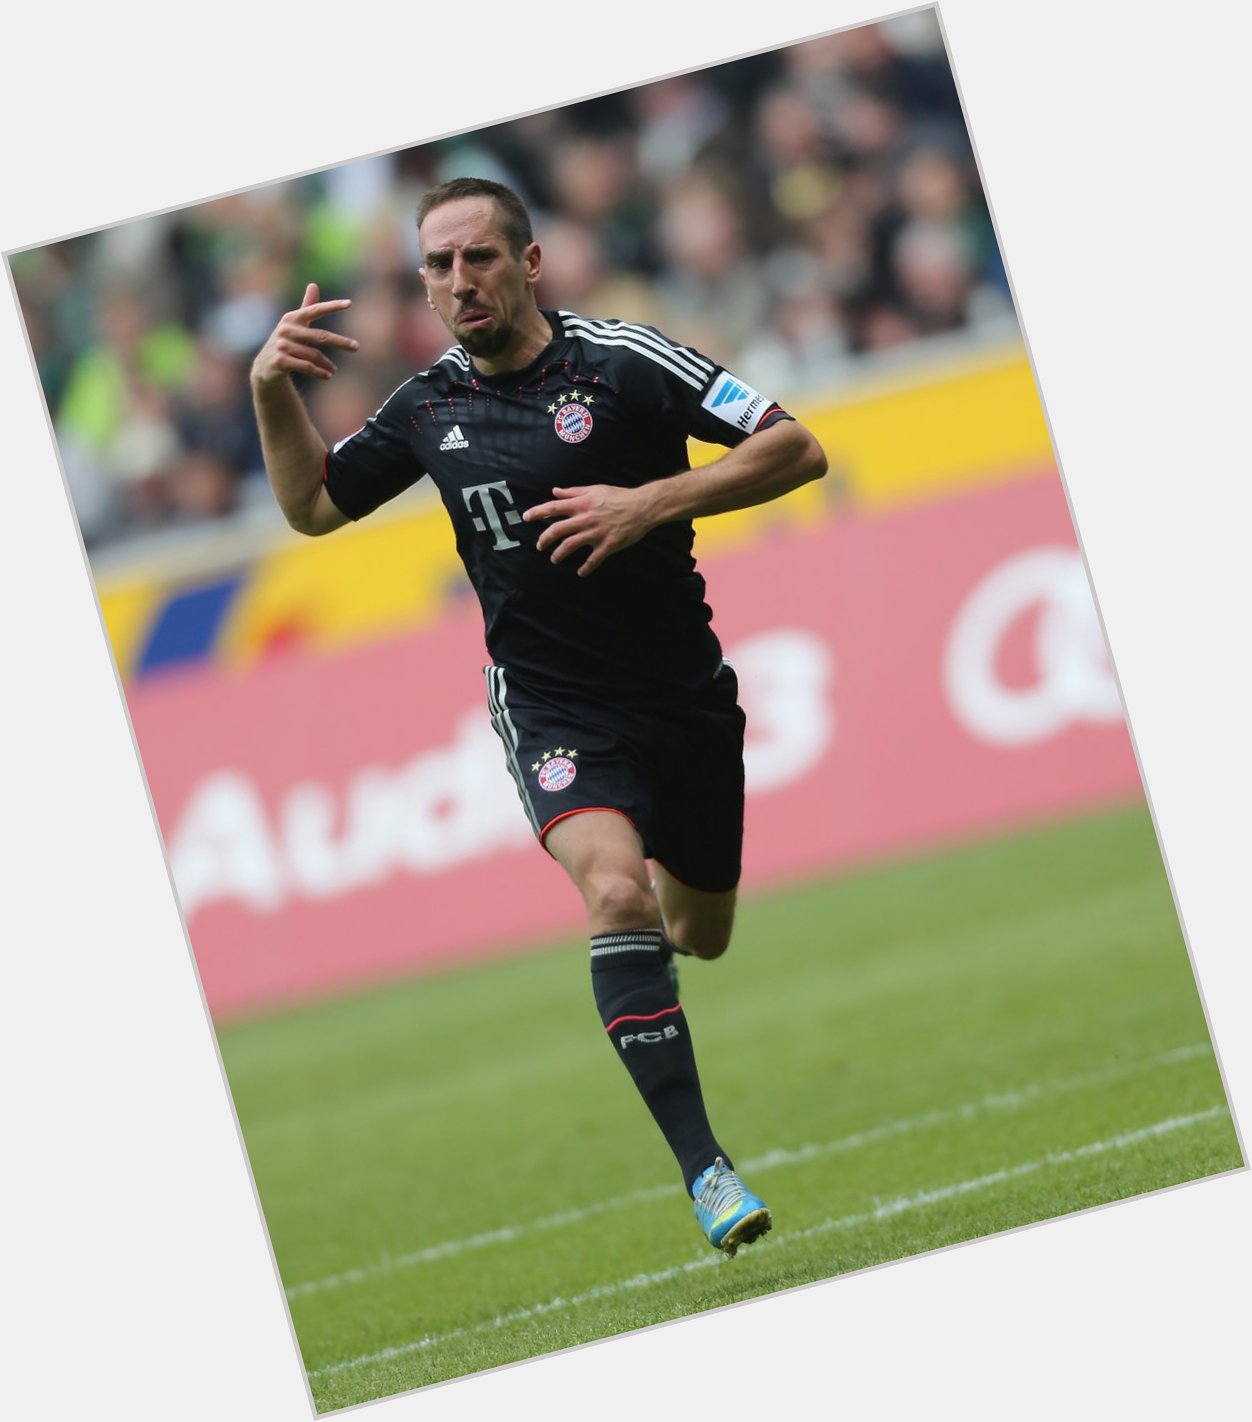 Happy 40th birthday to Franck Ribéry. 

